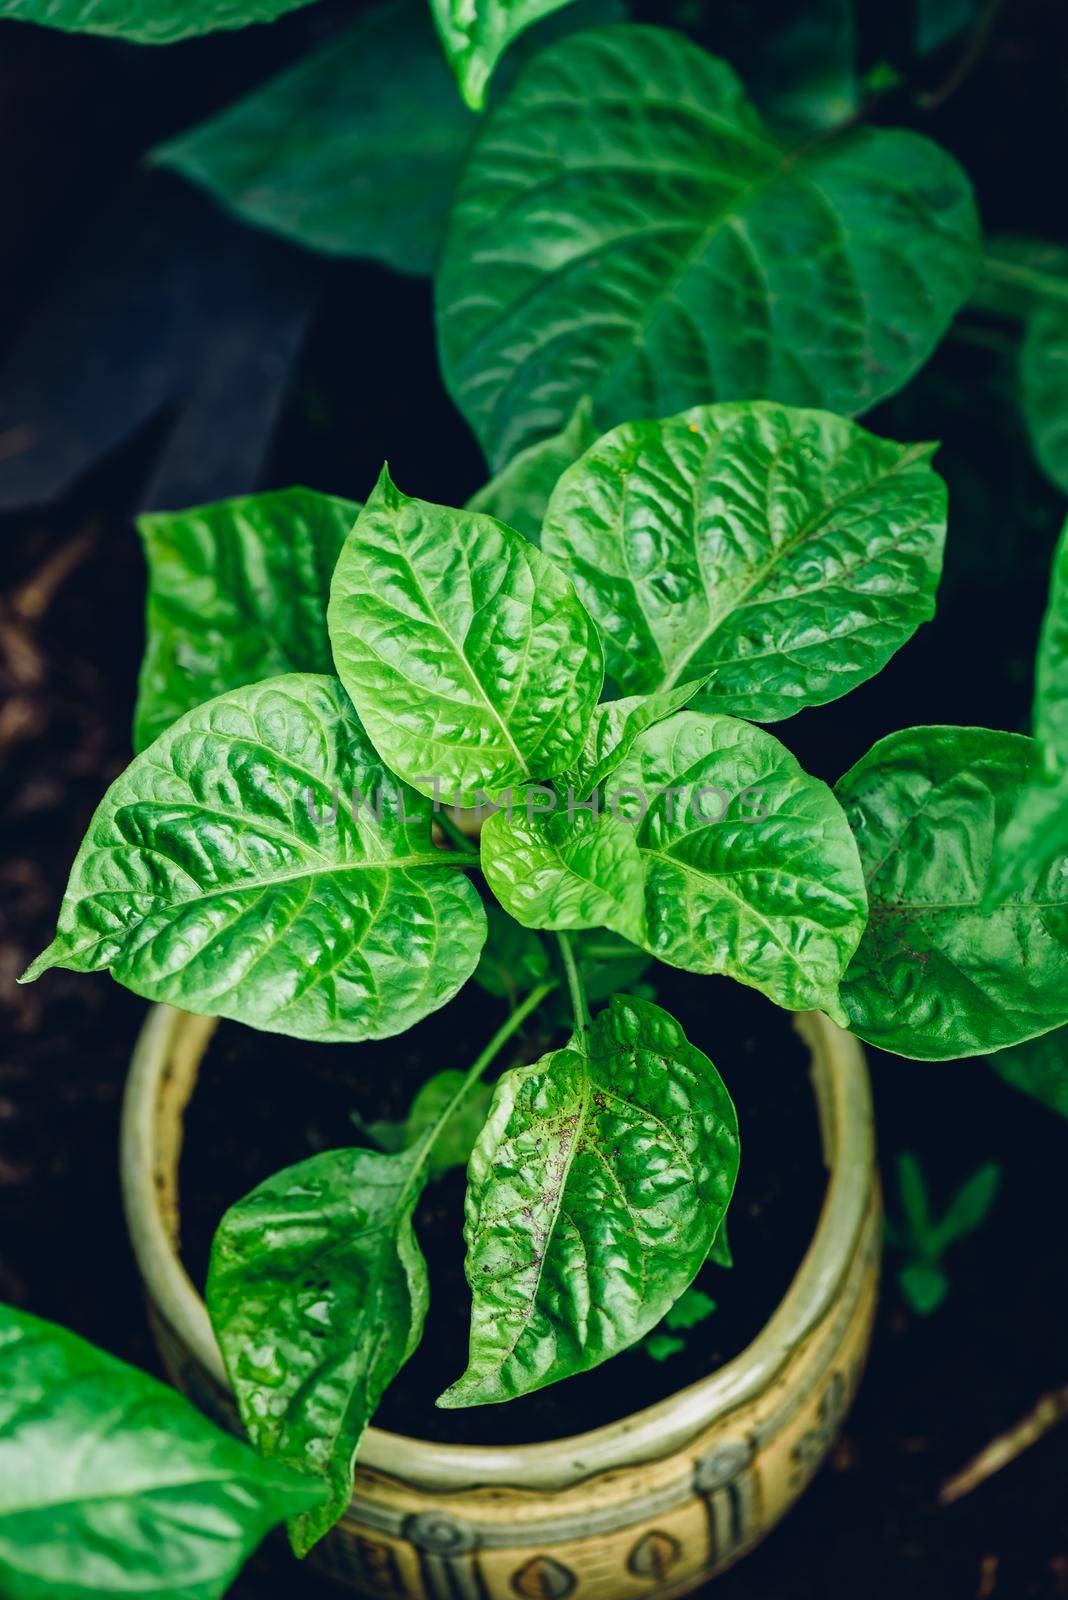 Habanero Pepper growing in Pot by Seva_blsv